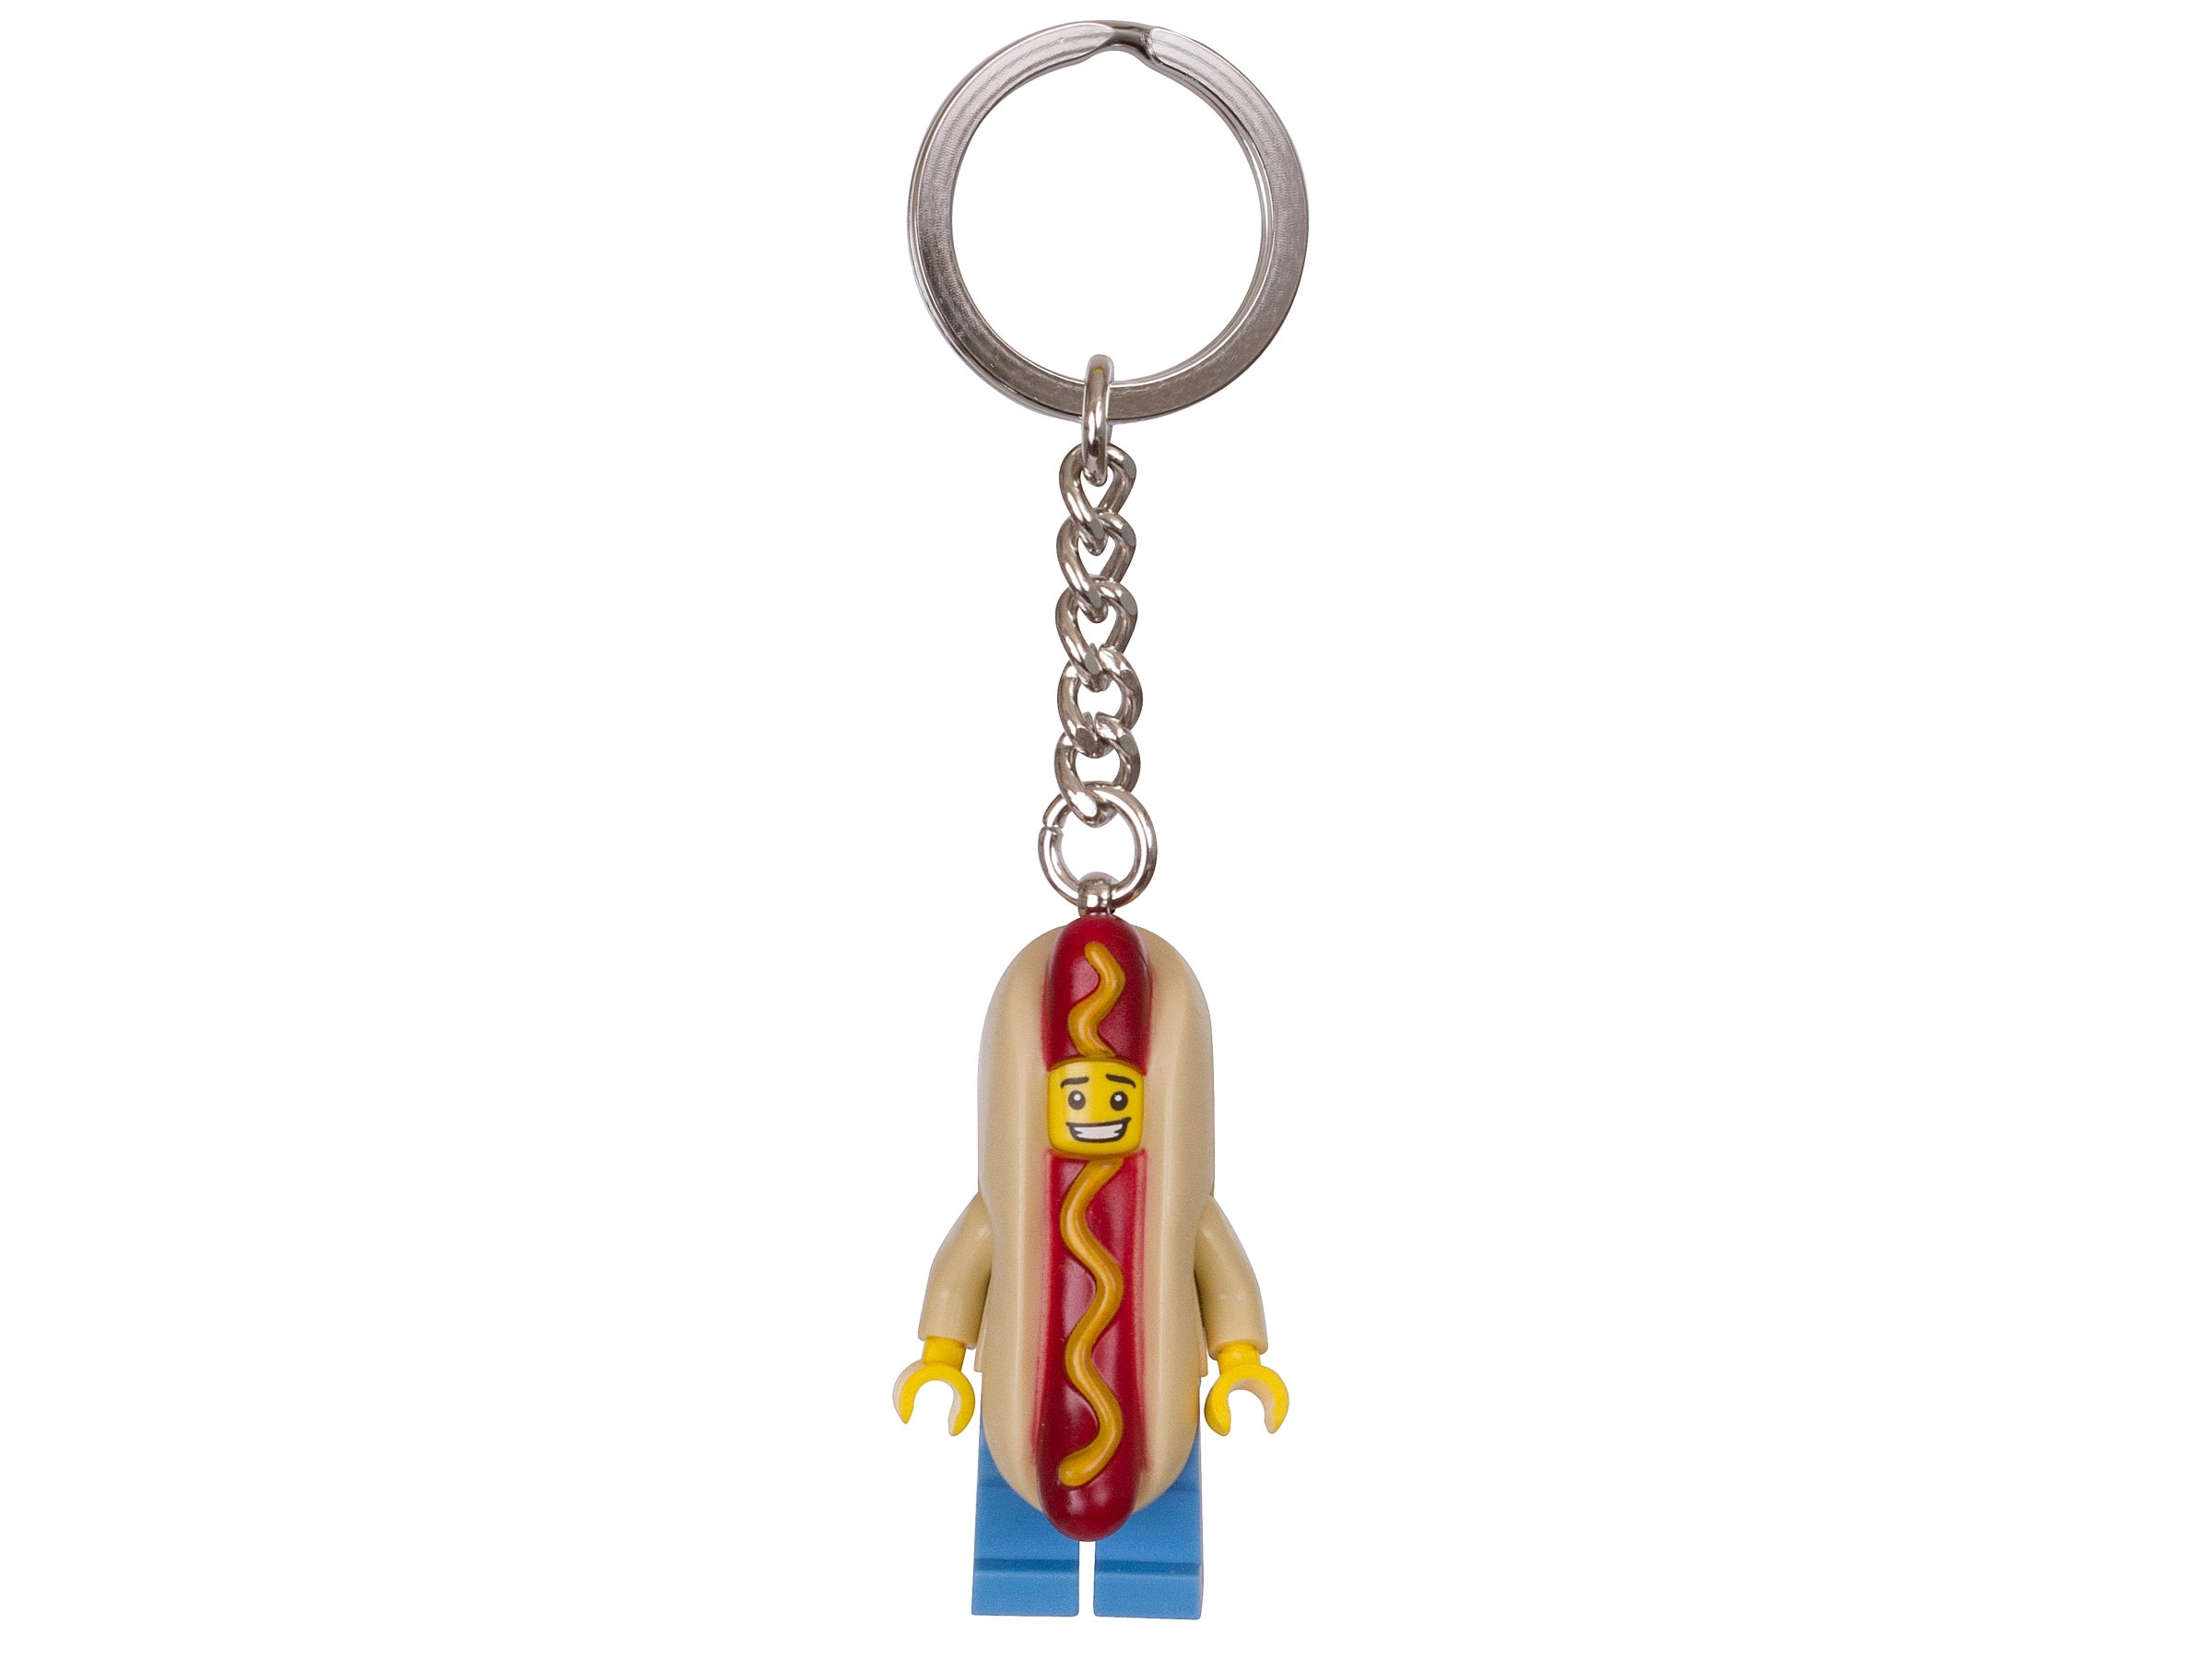 Lego Hotdog